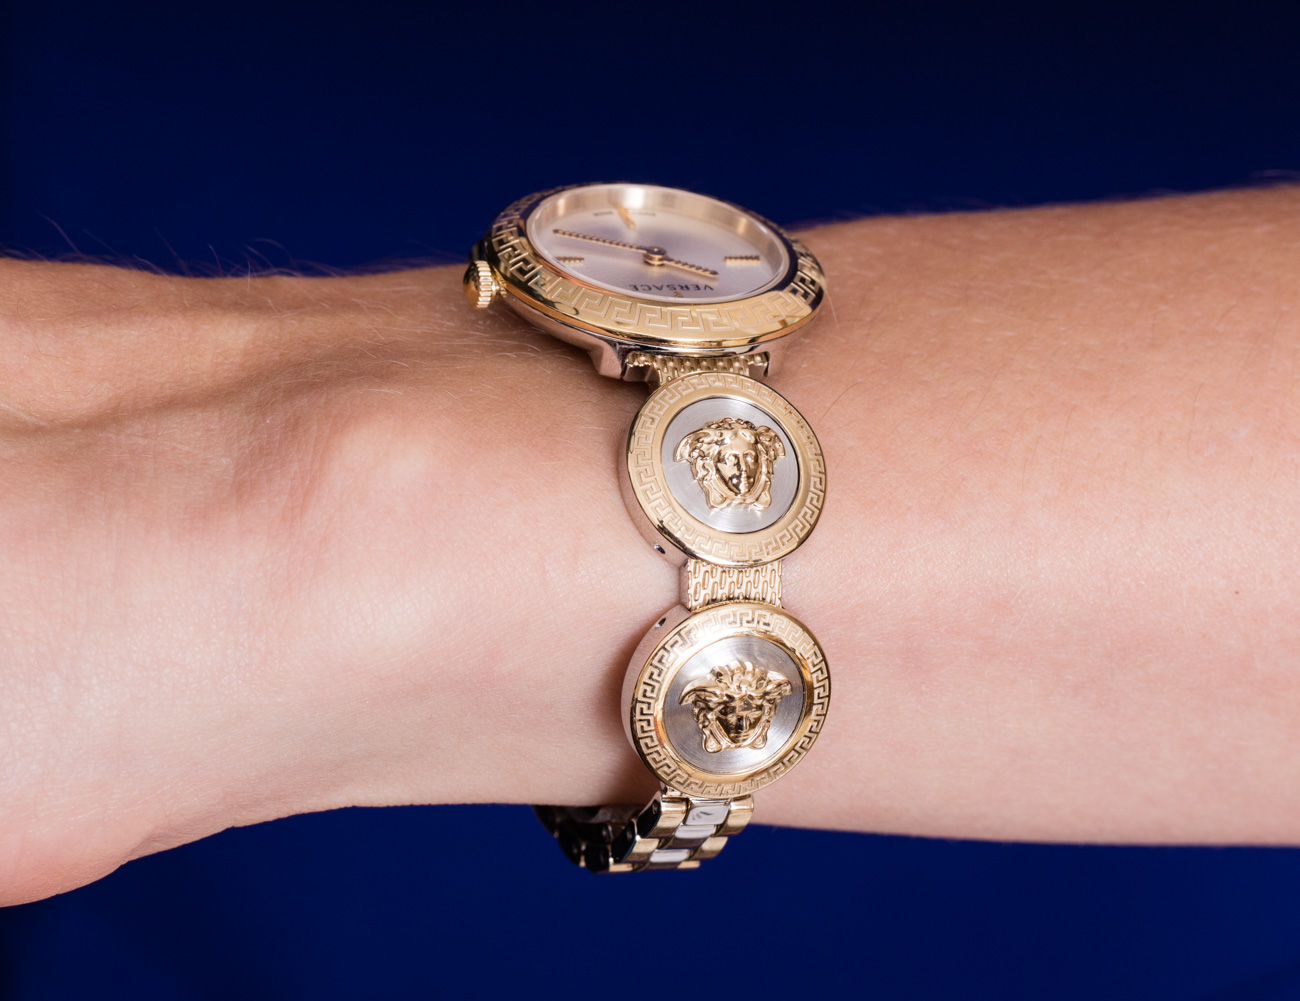 versace bracelet watch